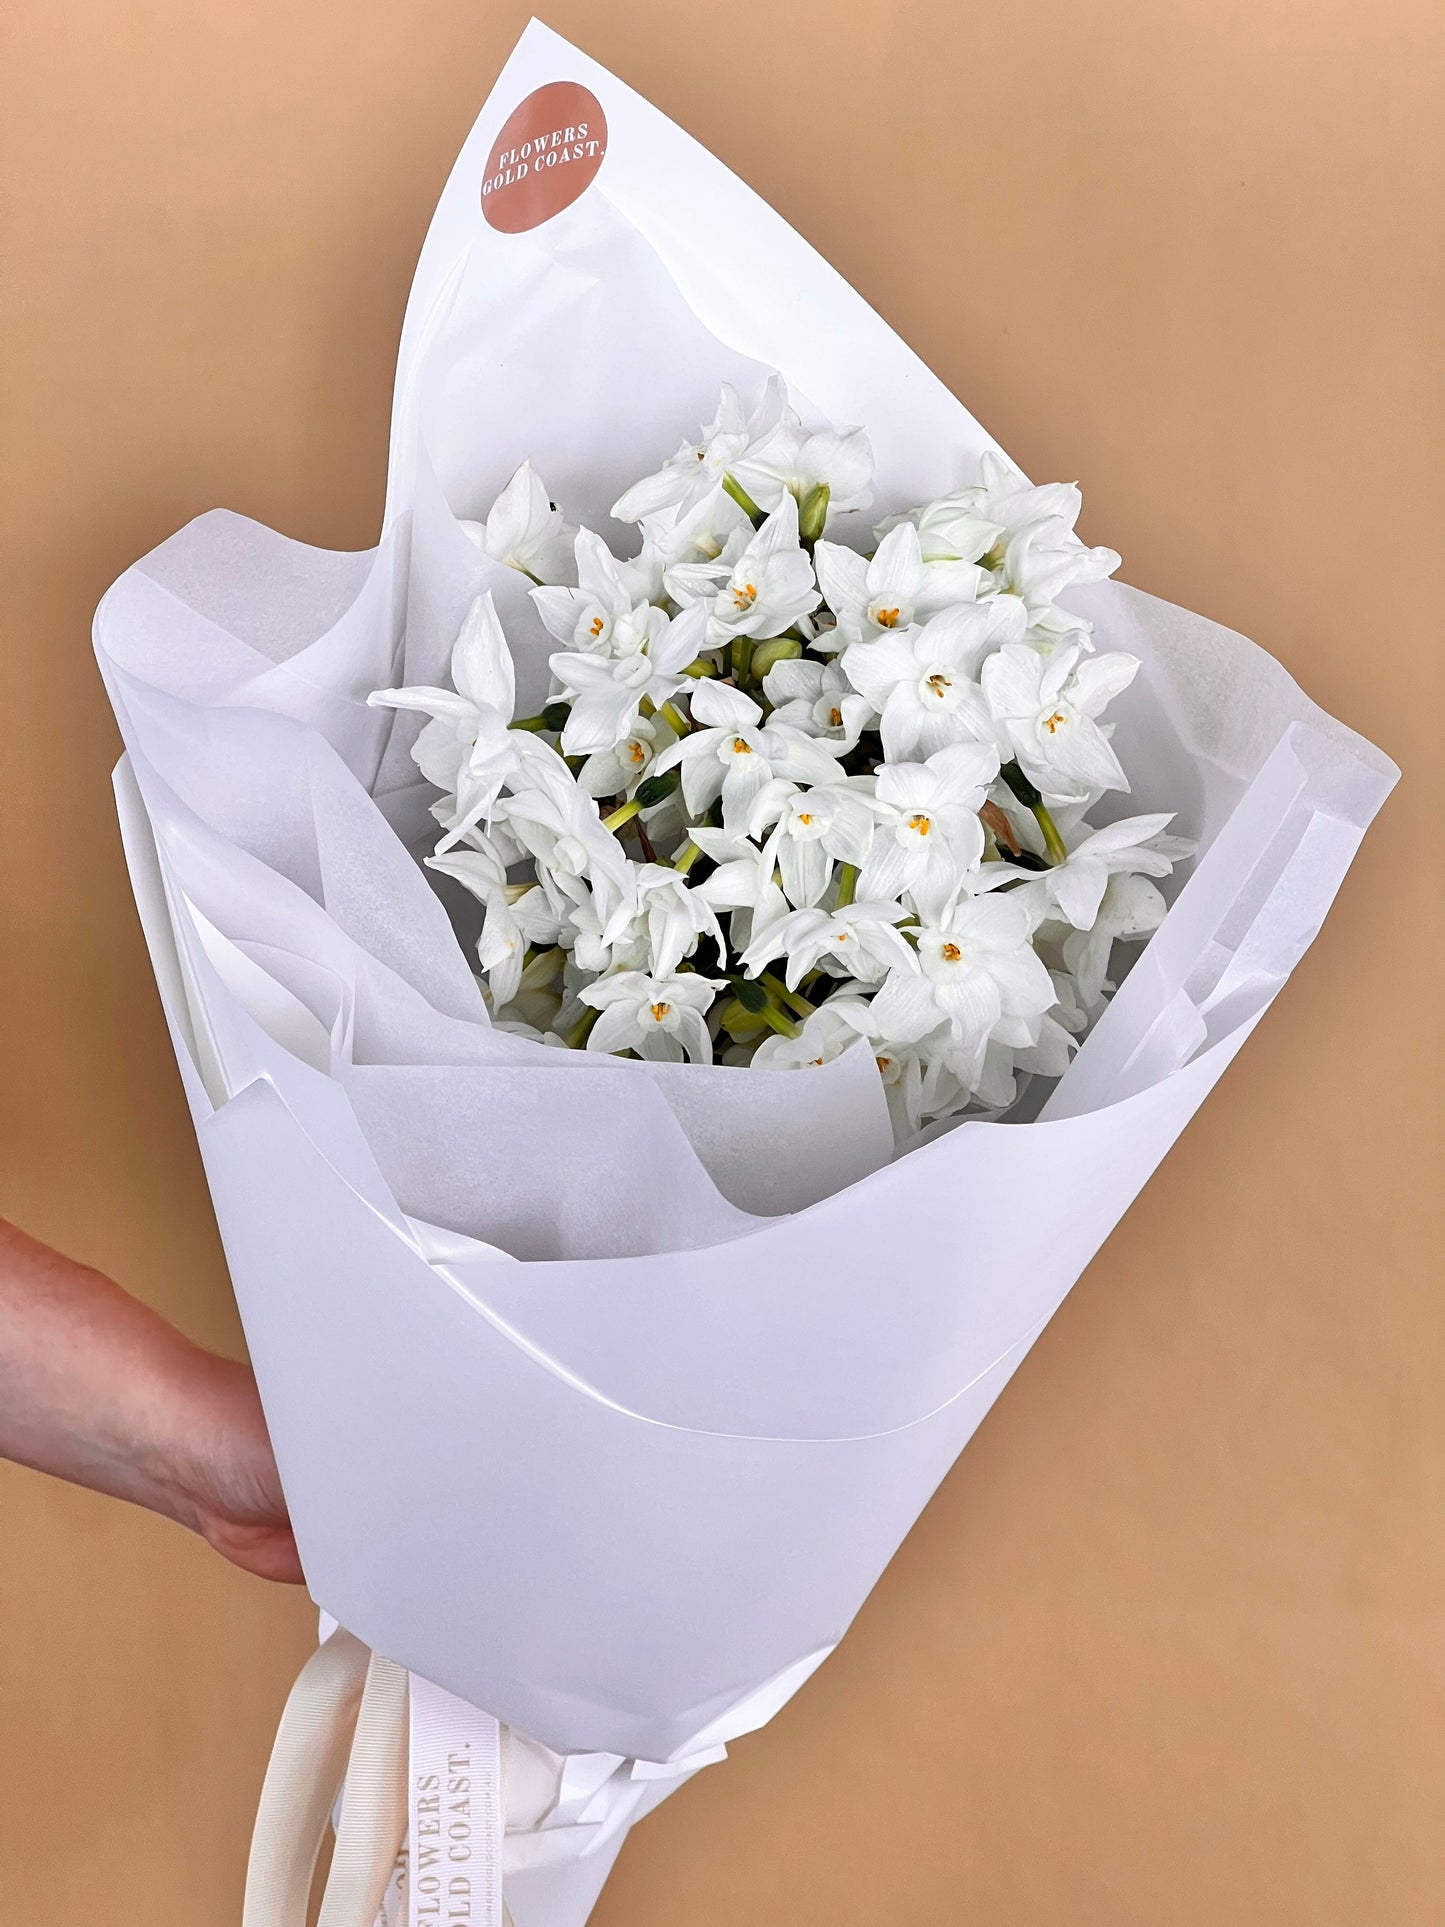 Daffodils Bunch-Flower-Delivery-Gold-Coast-Florist-Flowers Gold Coast-https://www.flowersgoldcoast.com.au-best-florist